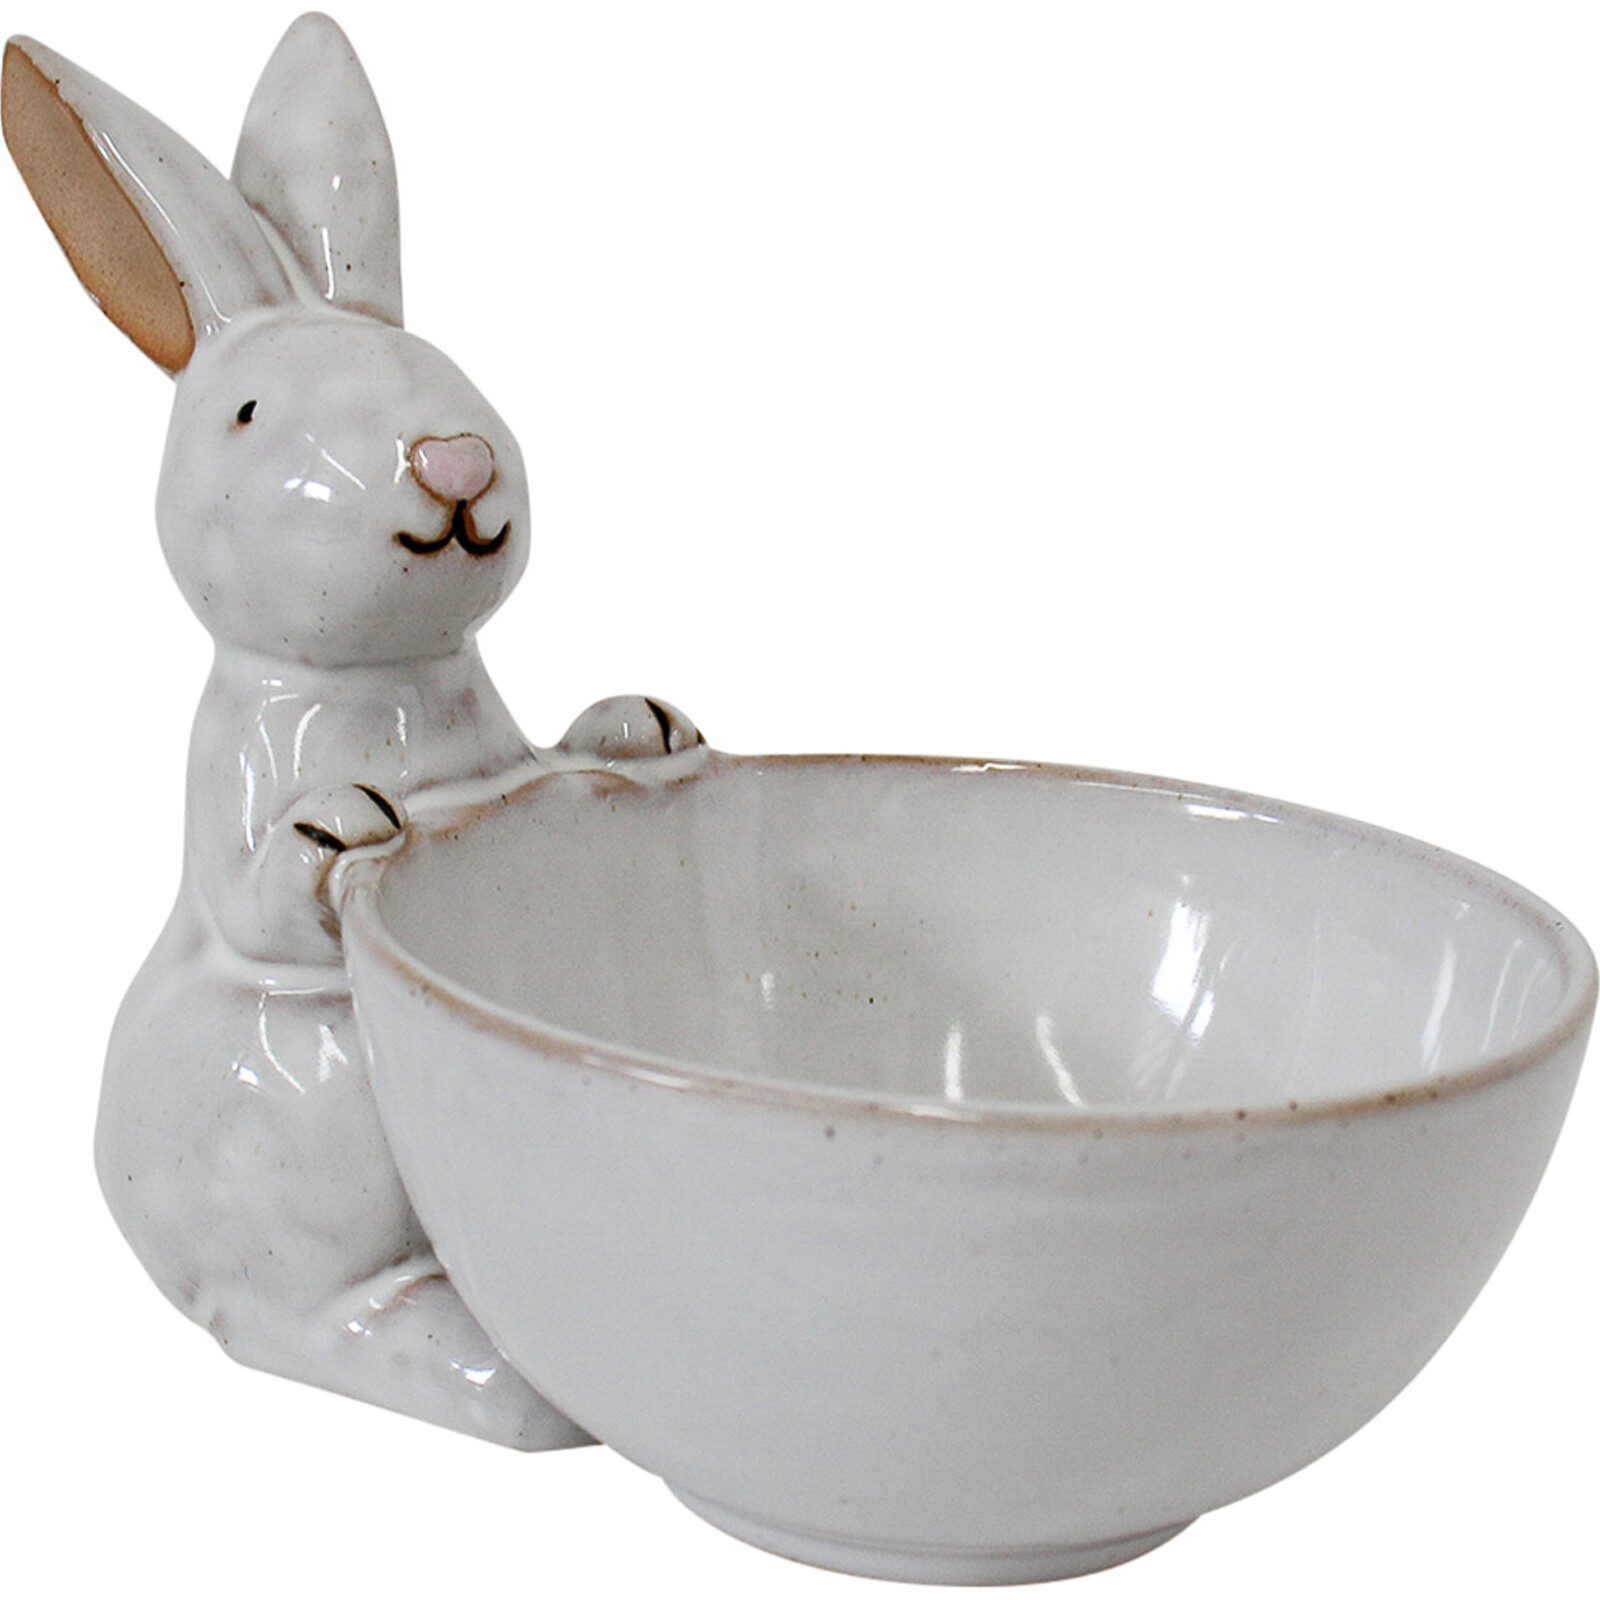 Bunny Holding Bowl